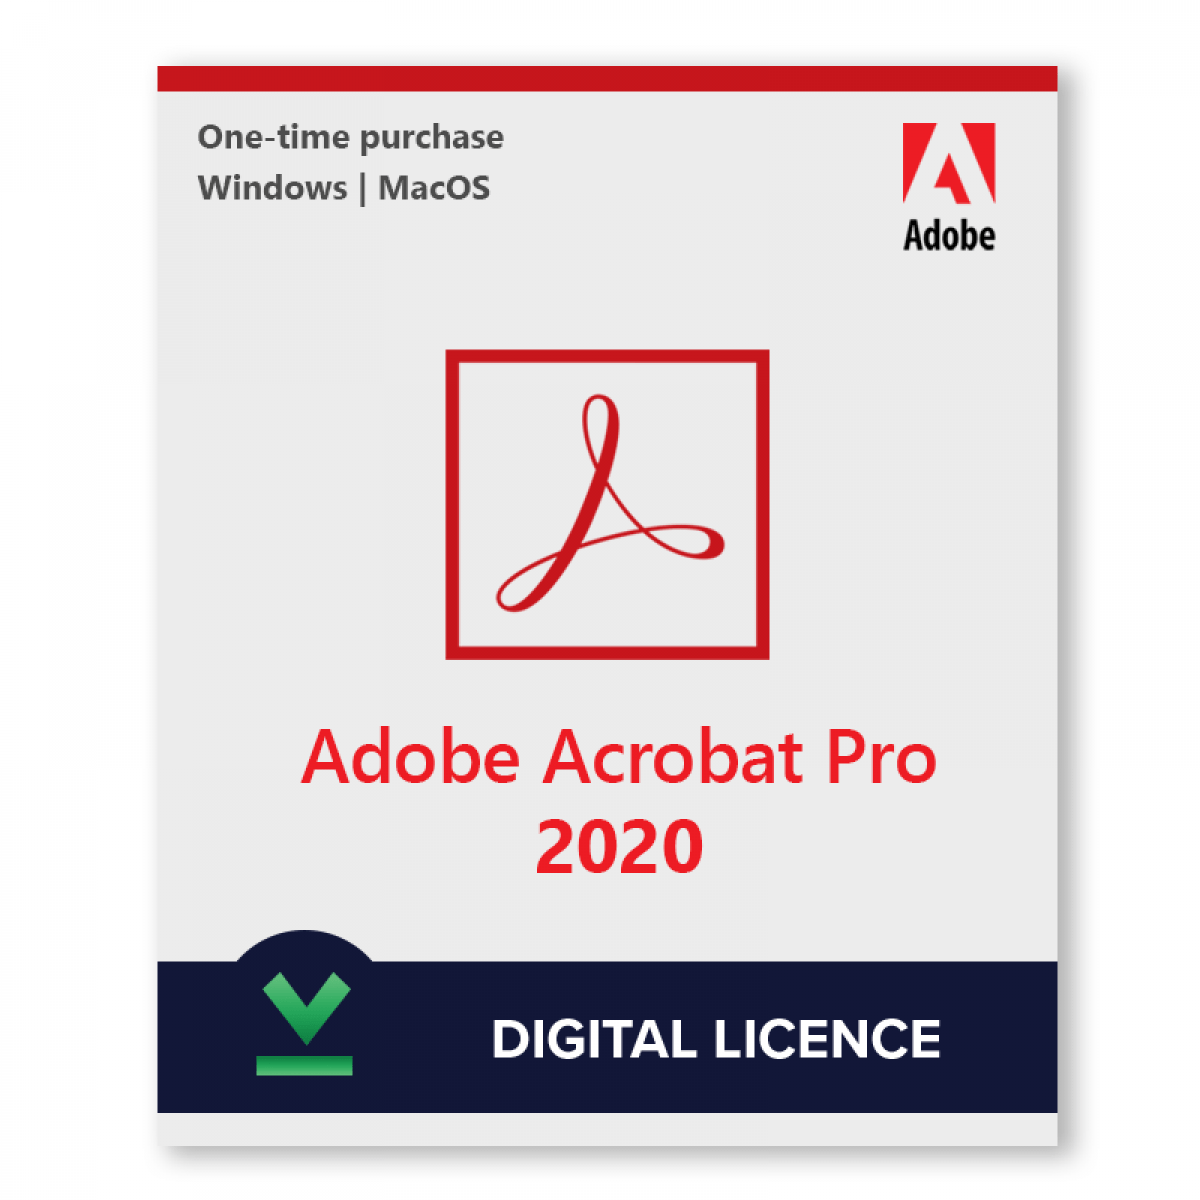 Adobe Acrobat Pro 2020 | Full Version | Lifetime License for 1 PC or MAC | Australian Stock - INFINITE-ITECH